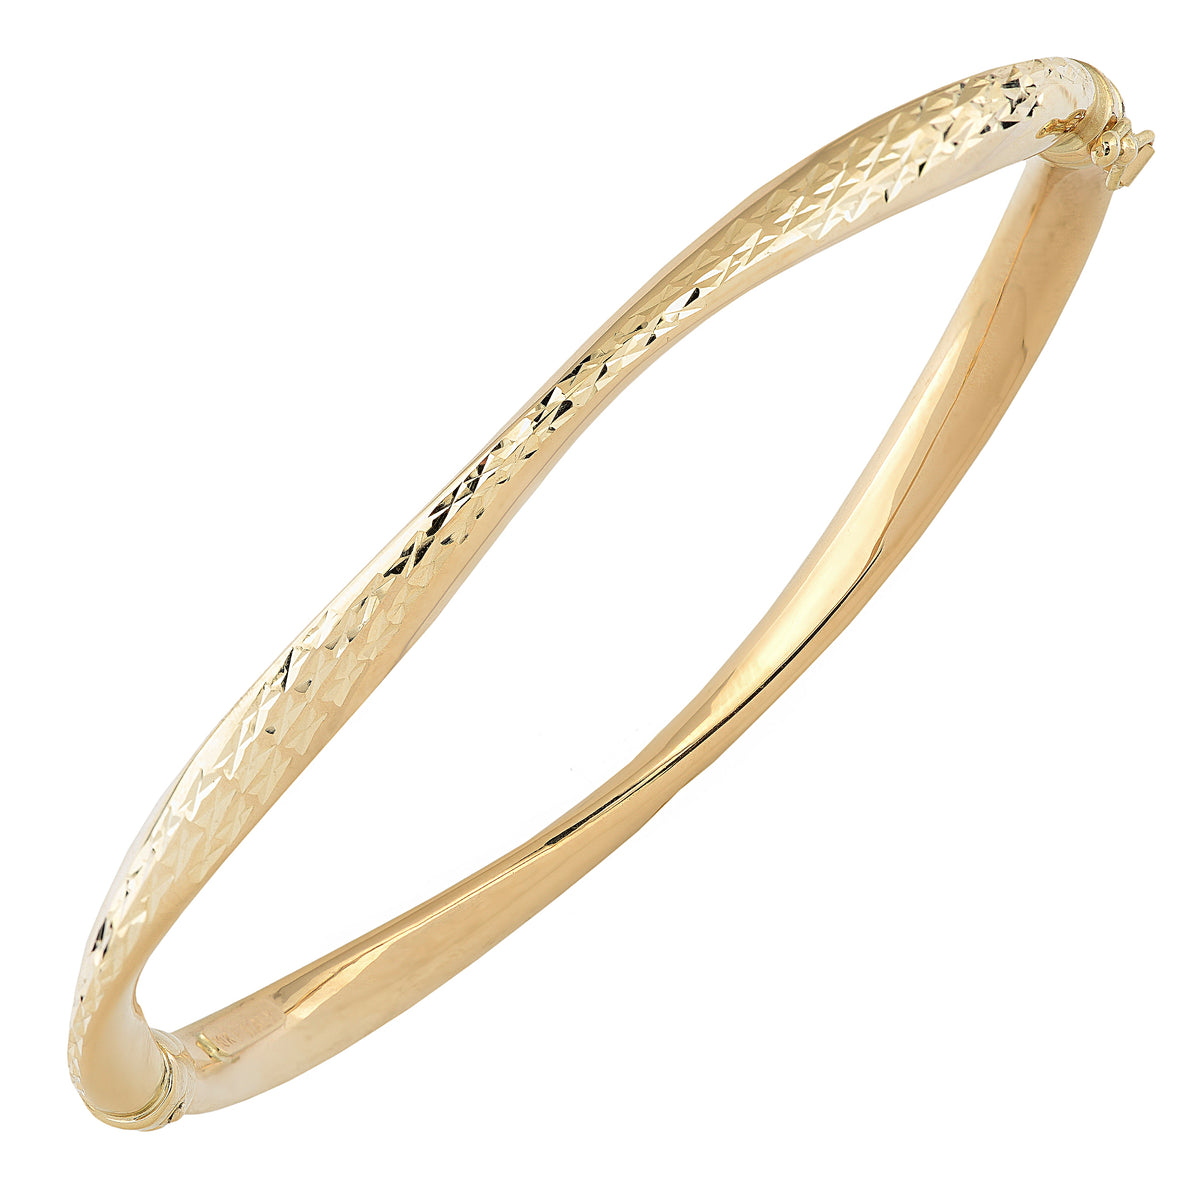 10k Yellow Gold Diamond Cut Women's Bangle Bracelet, 7.5" fine designer jewelry for men and women